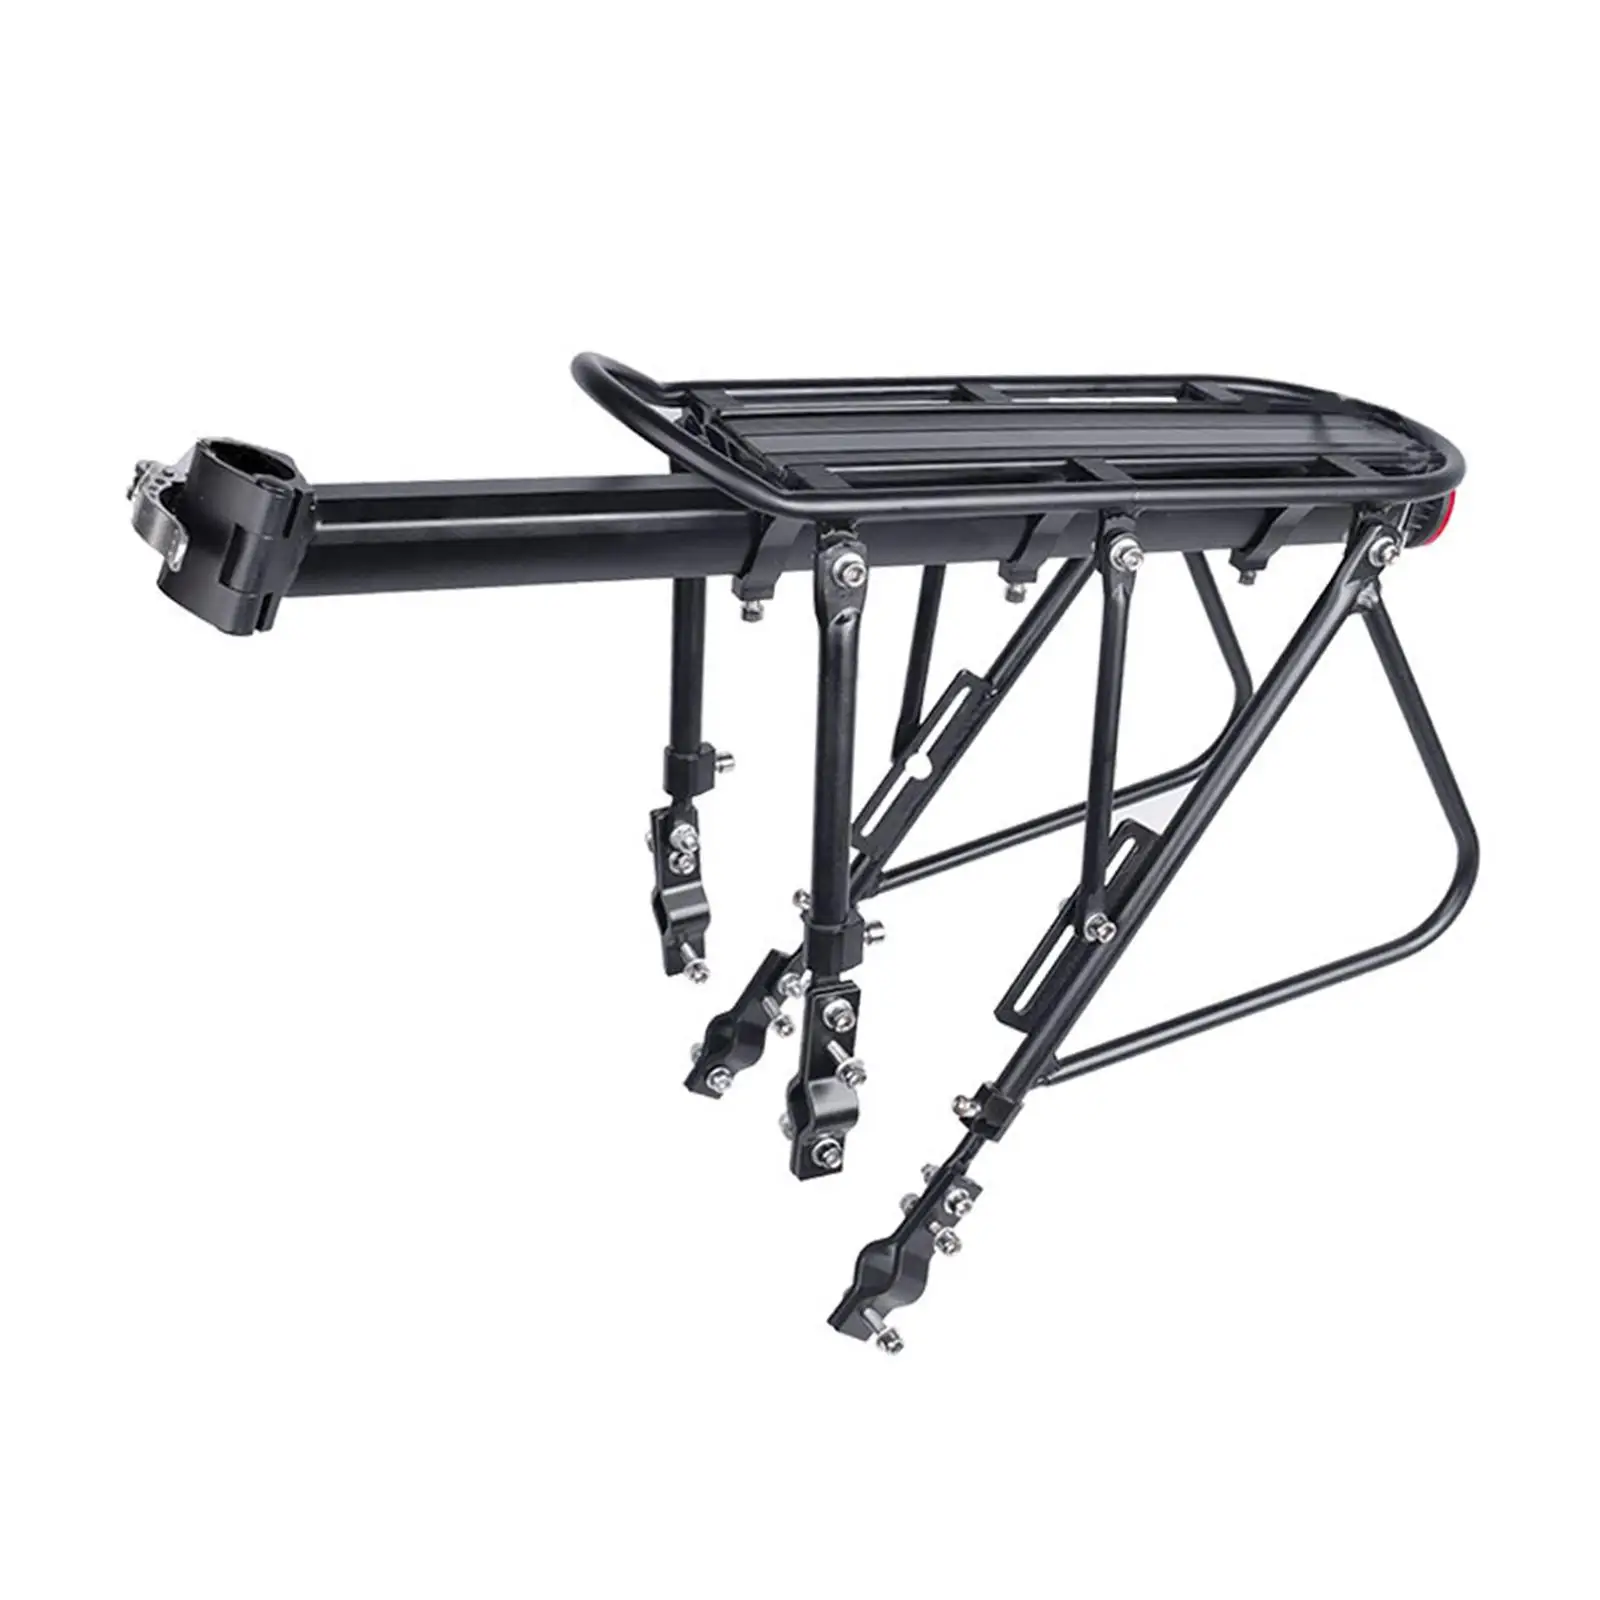 Rear Bike Rack 132-242 lbs Capacity Accessories Easy Installation Bike Luggage Carrier Bike Cargo Rack for Road Bike